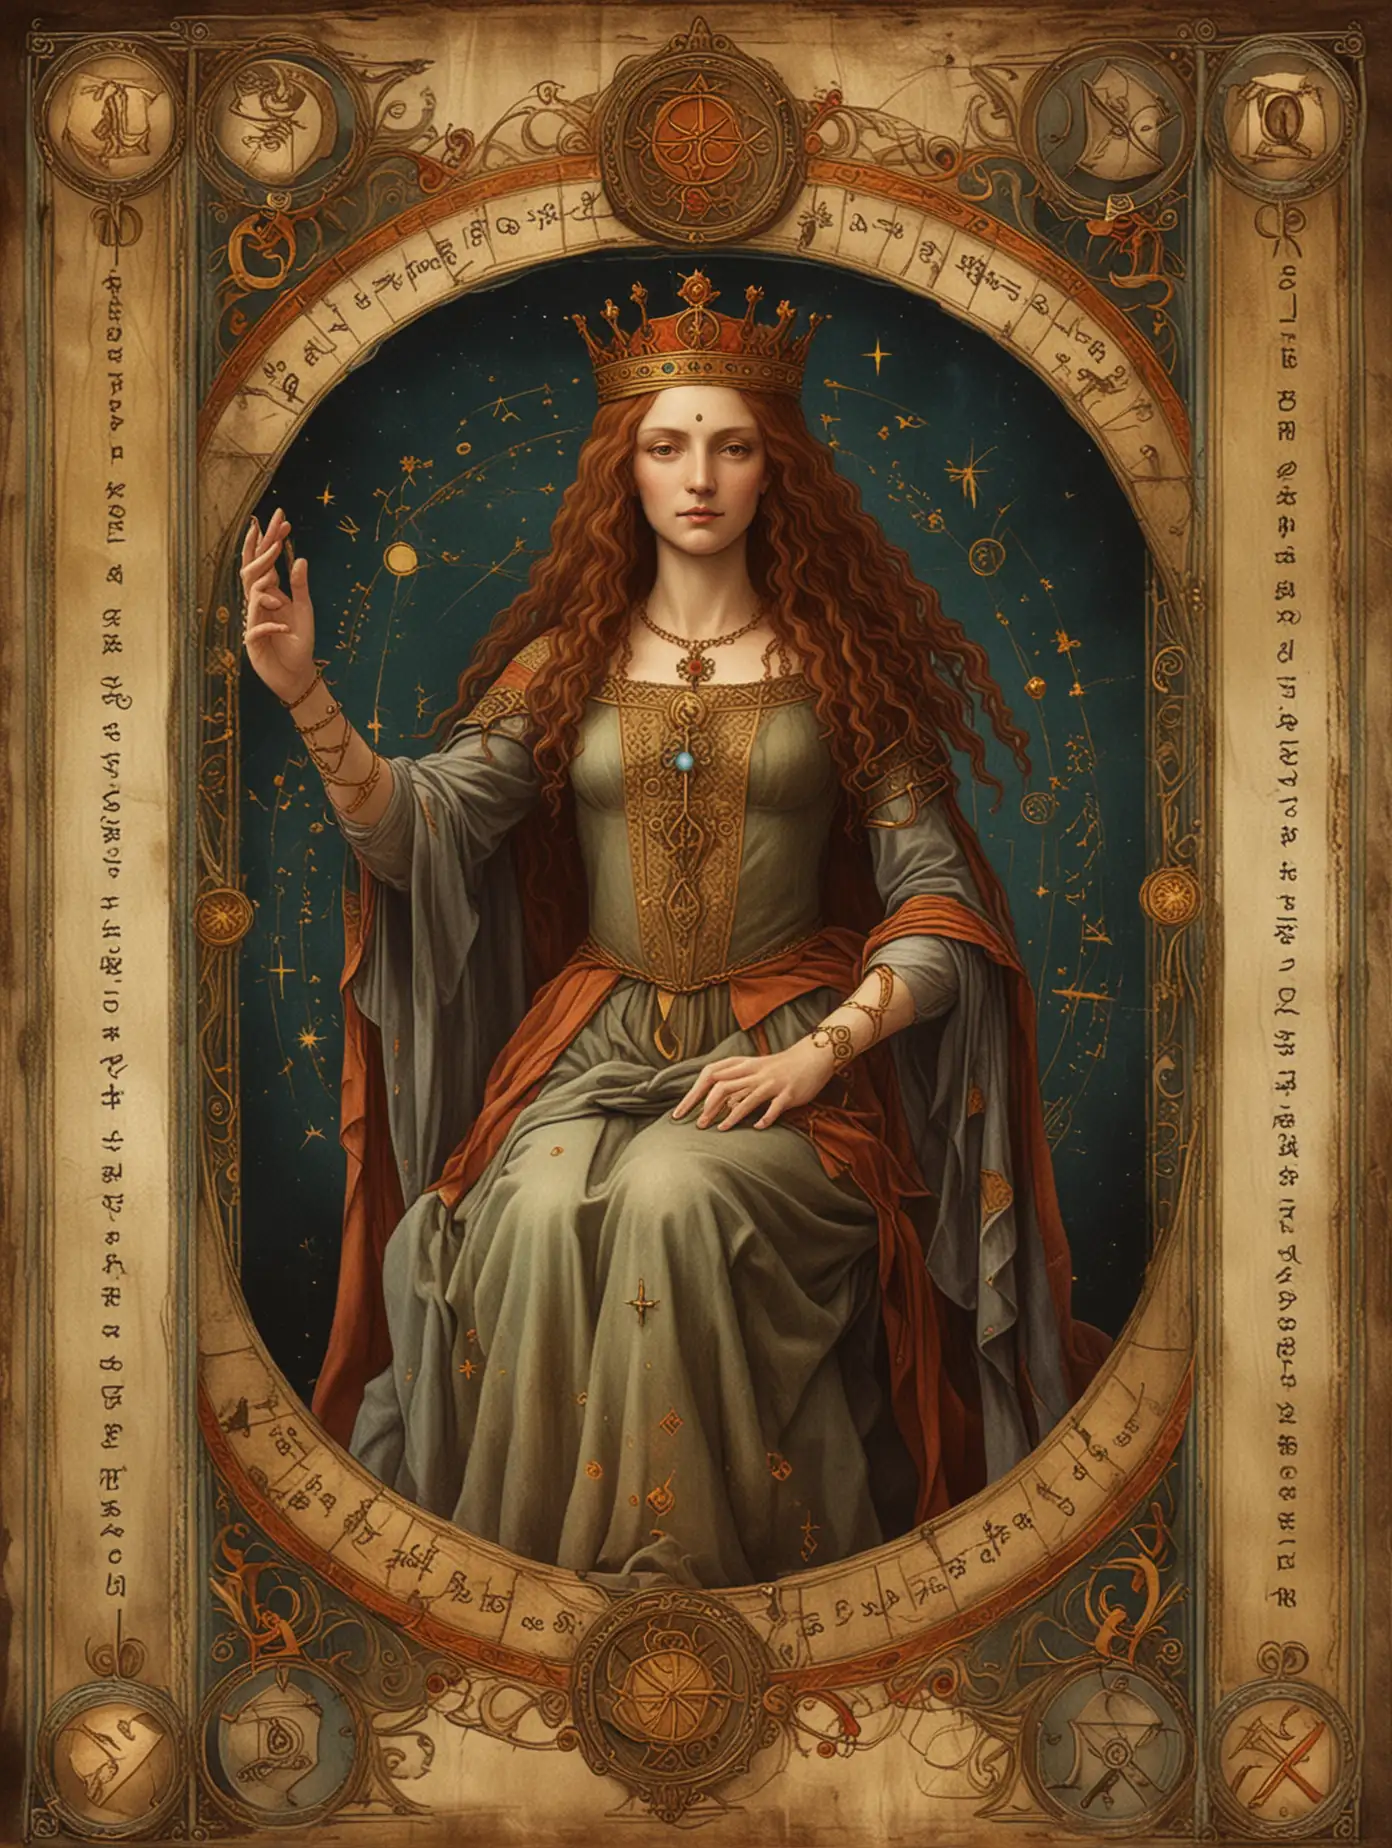 Leonardo-da-Vinci-Style-Tarot-Painting-The-Empress-with-Original-Rider-Deck-Symbols